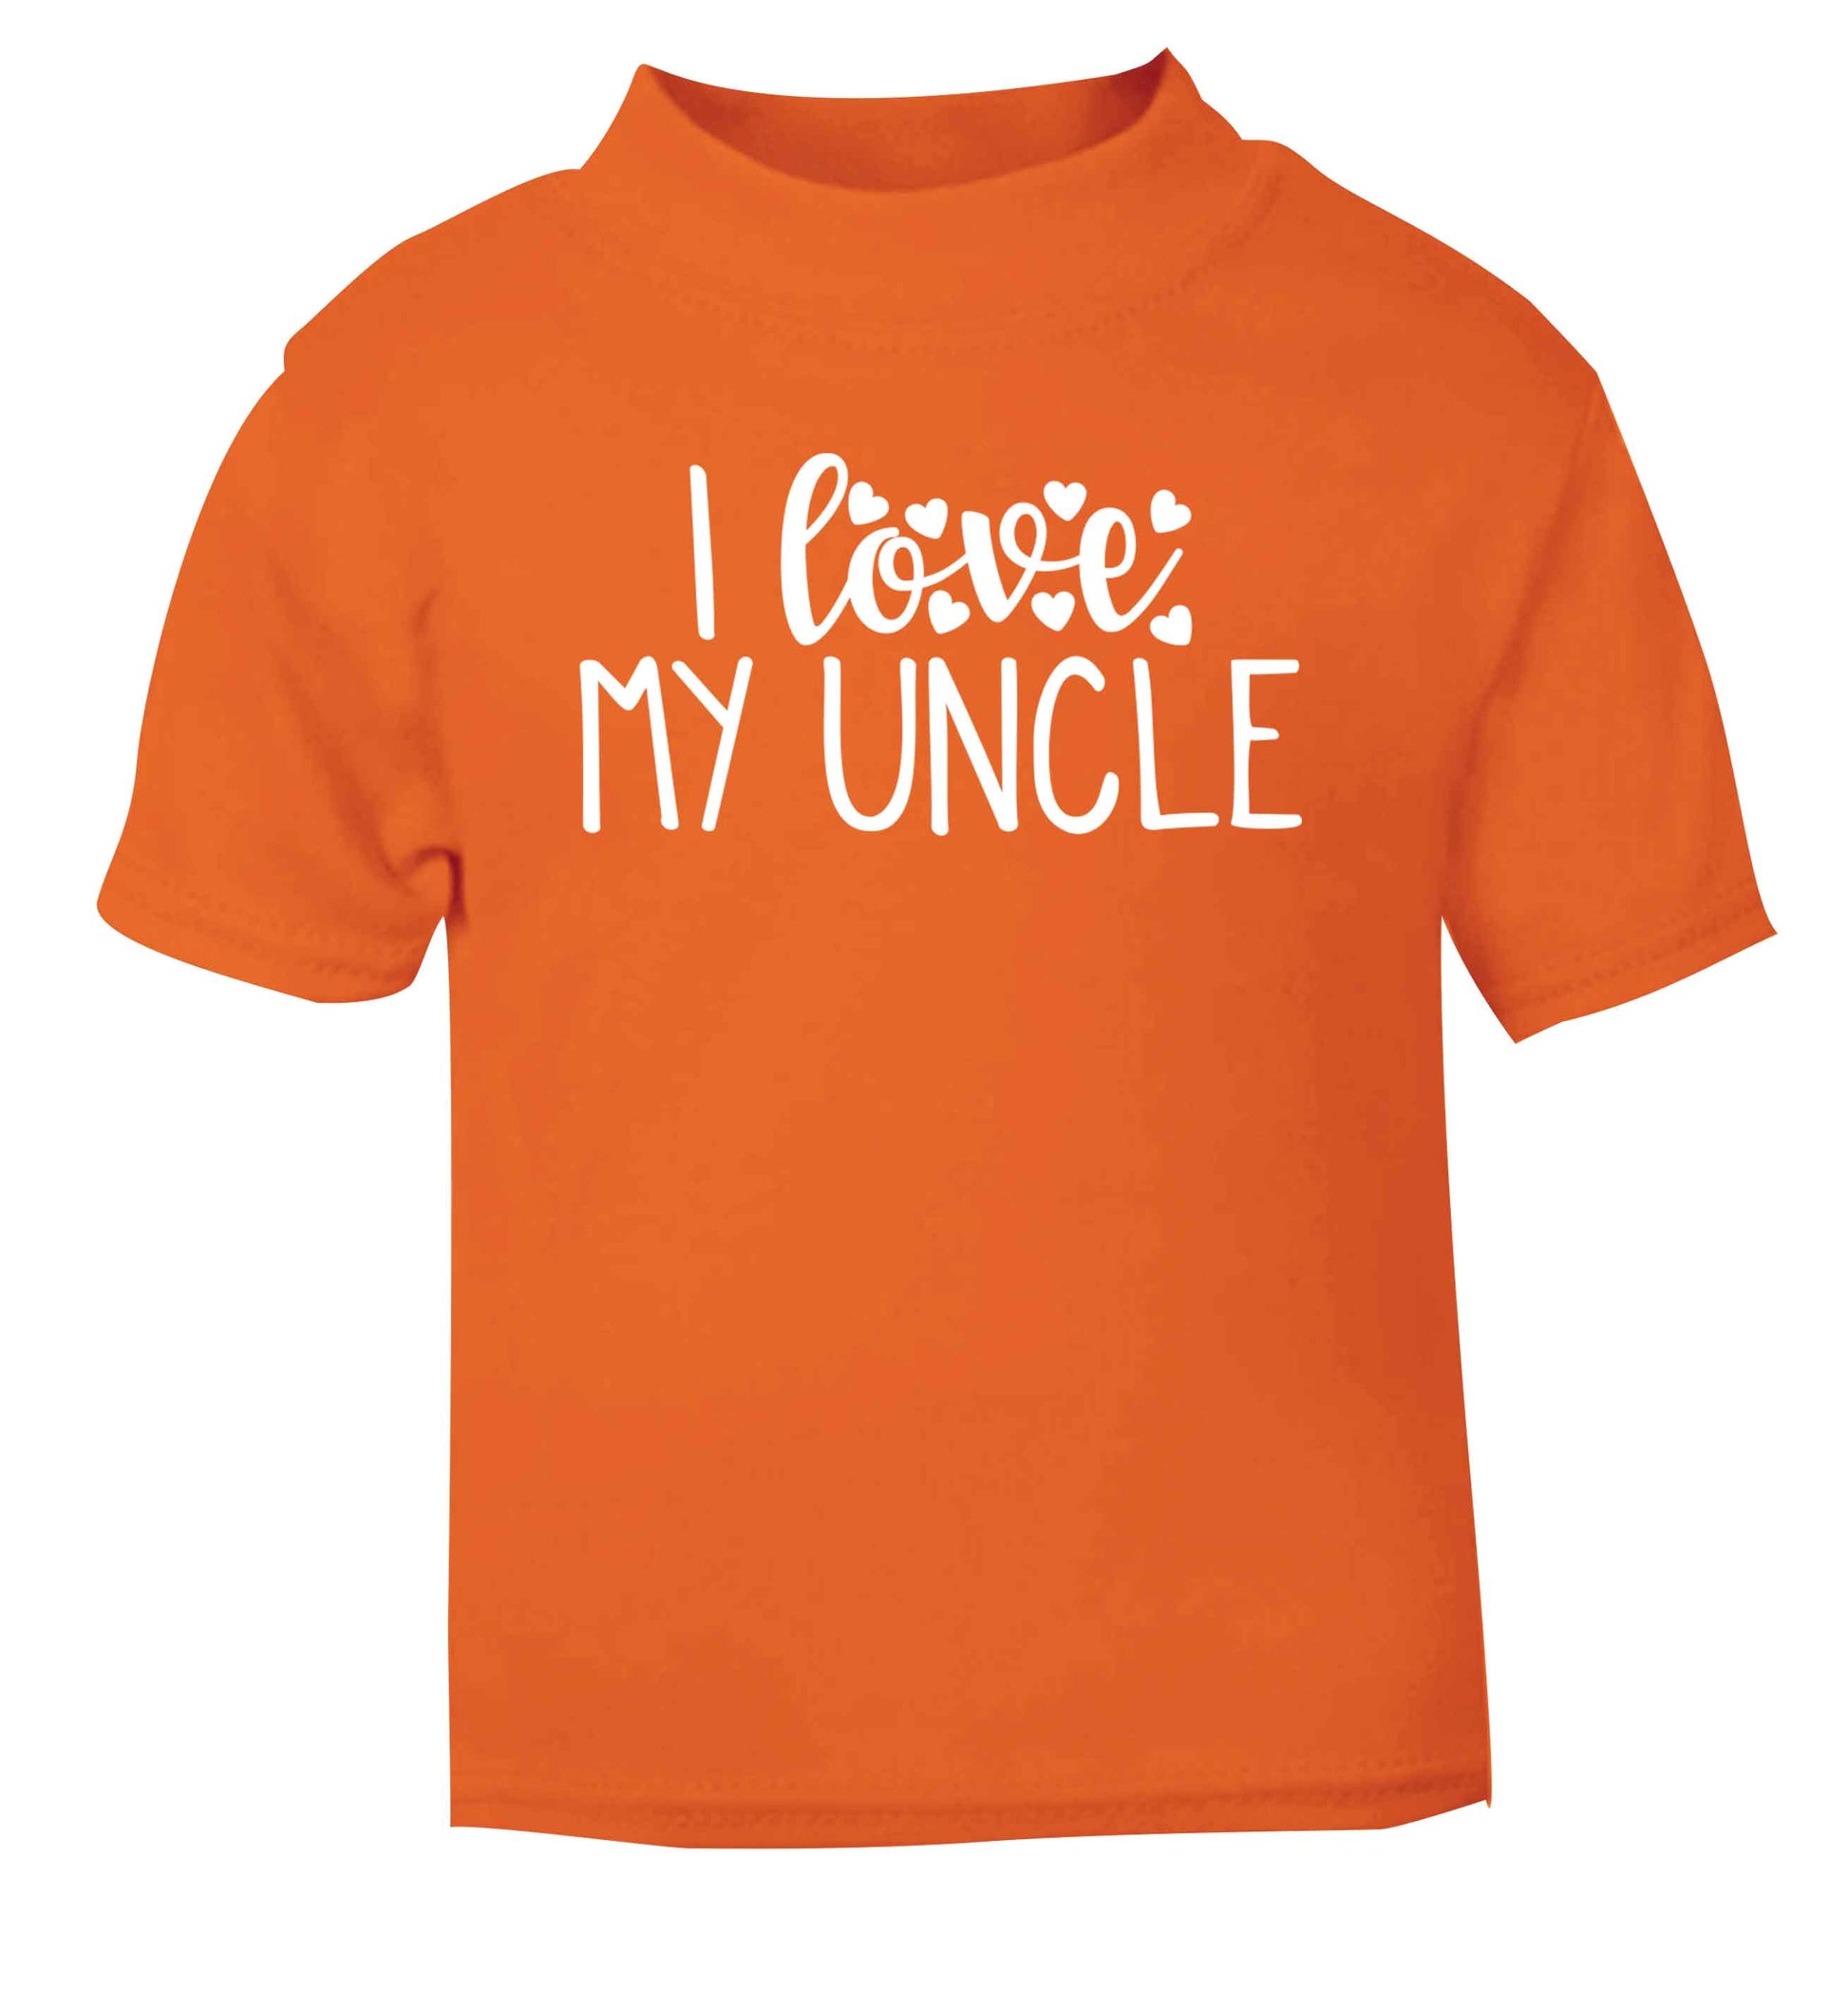 I love my uncle orange Baby Toddler Tshirt 2 Years